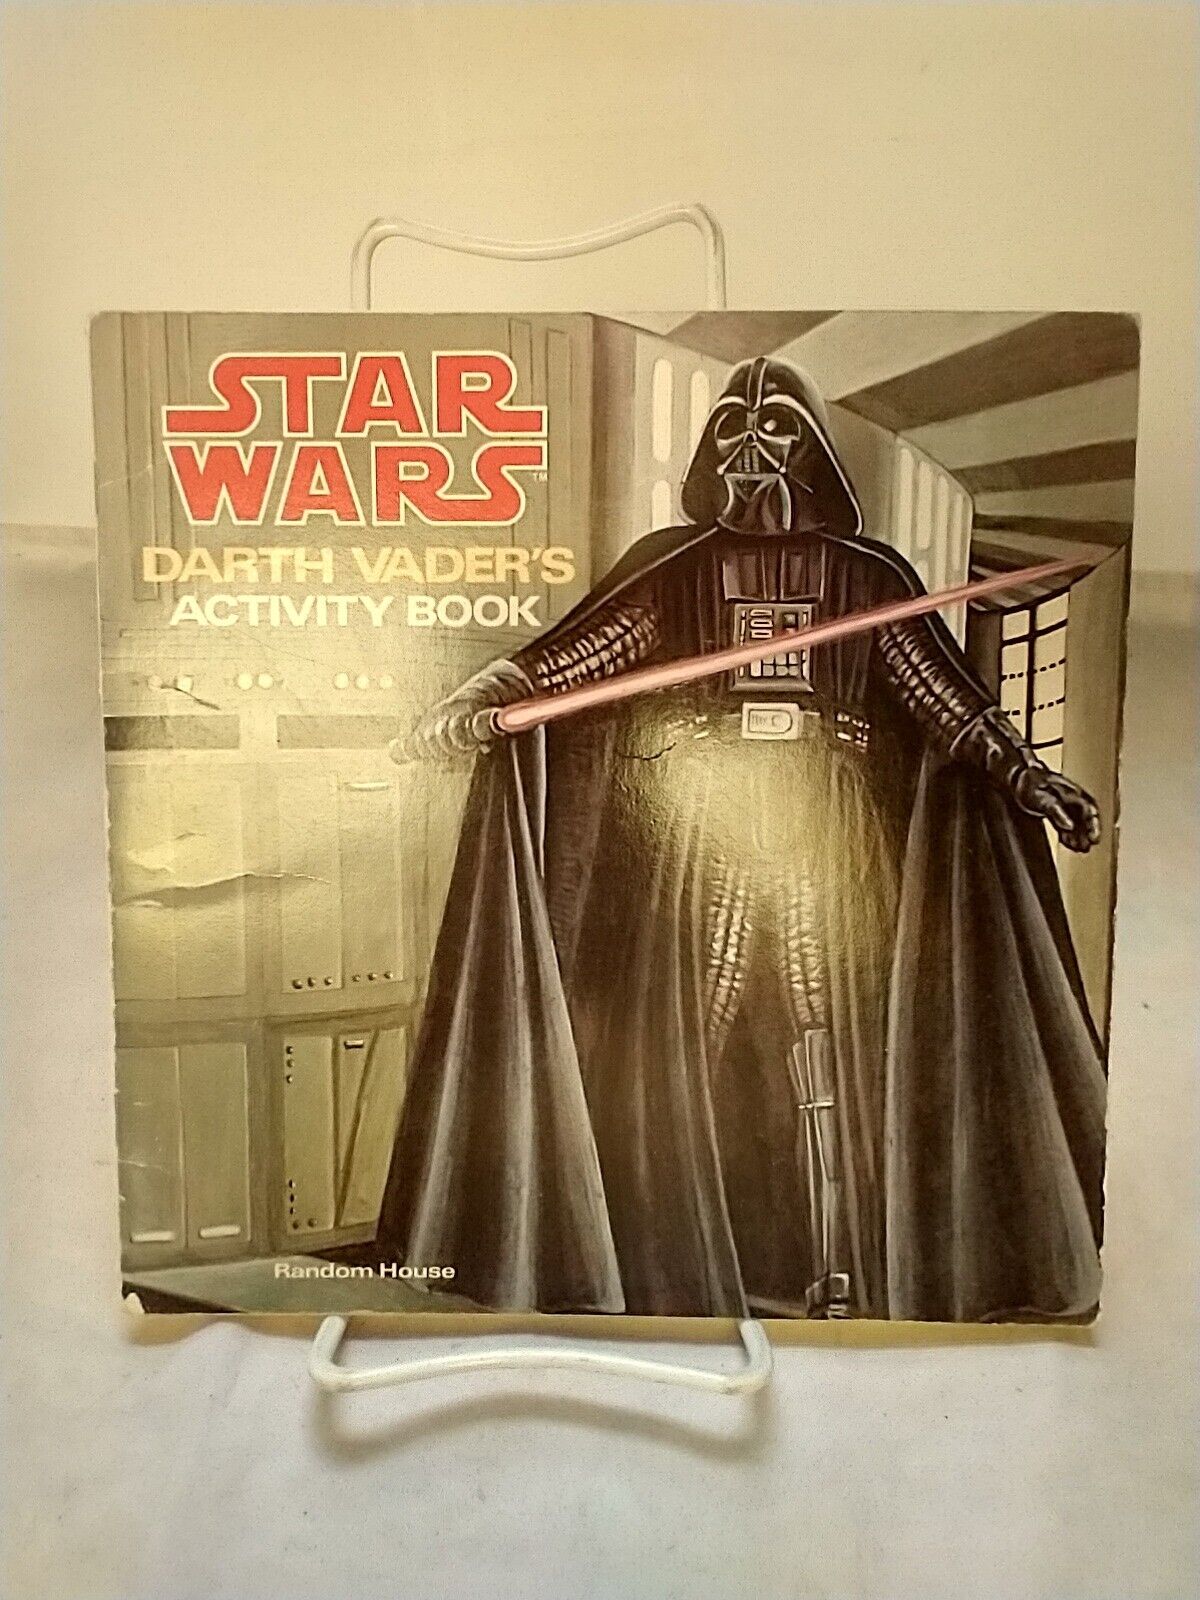 Star Wars Darth Vader's Activity Book Paperback Vintage 1979 Random House Used